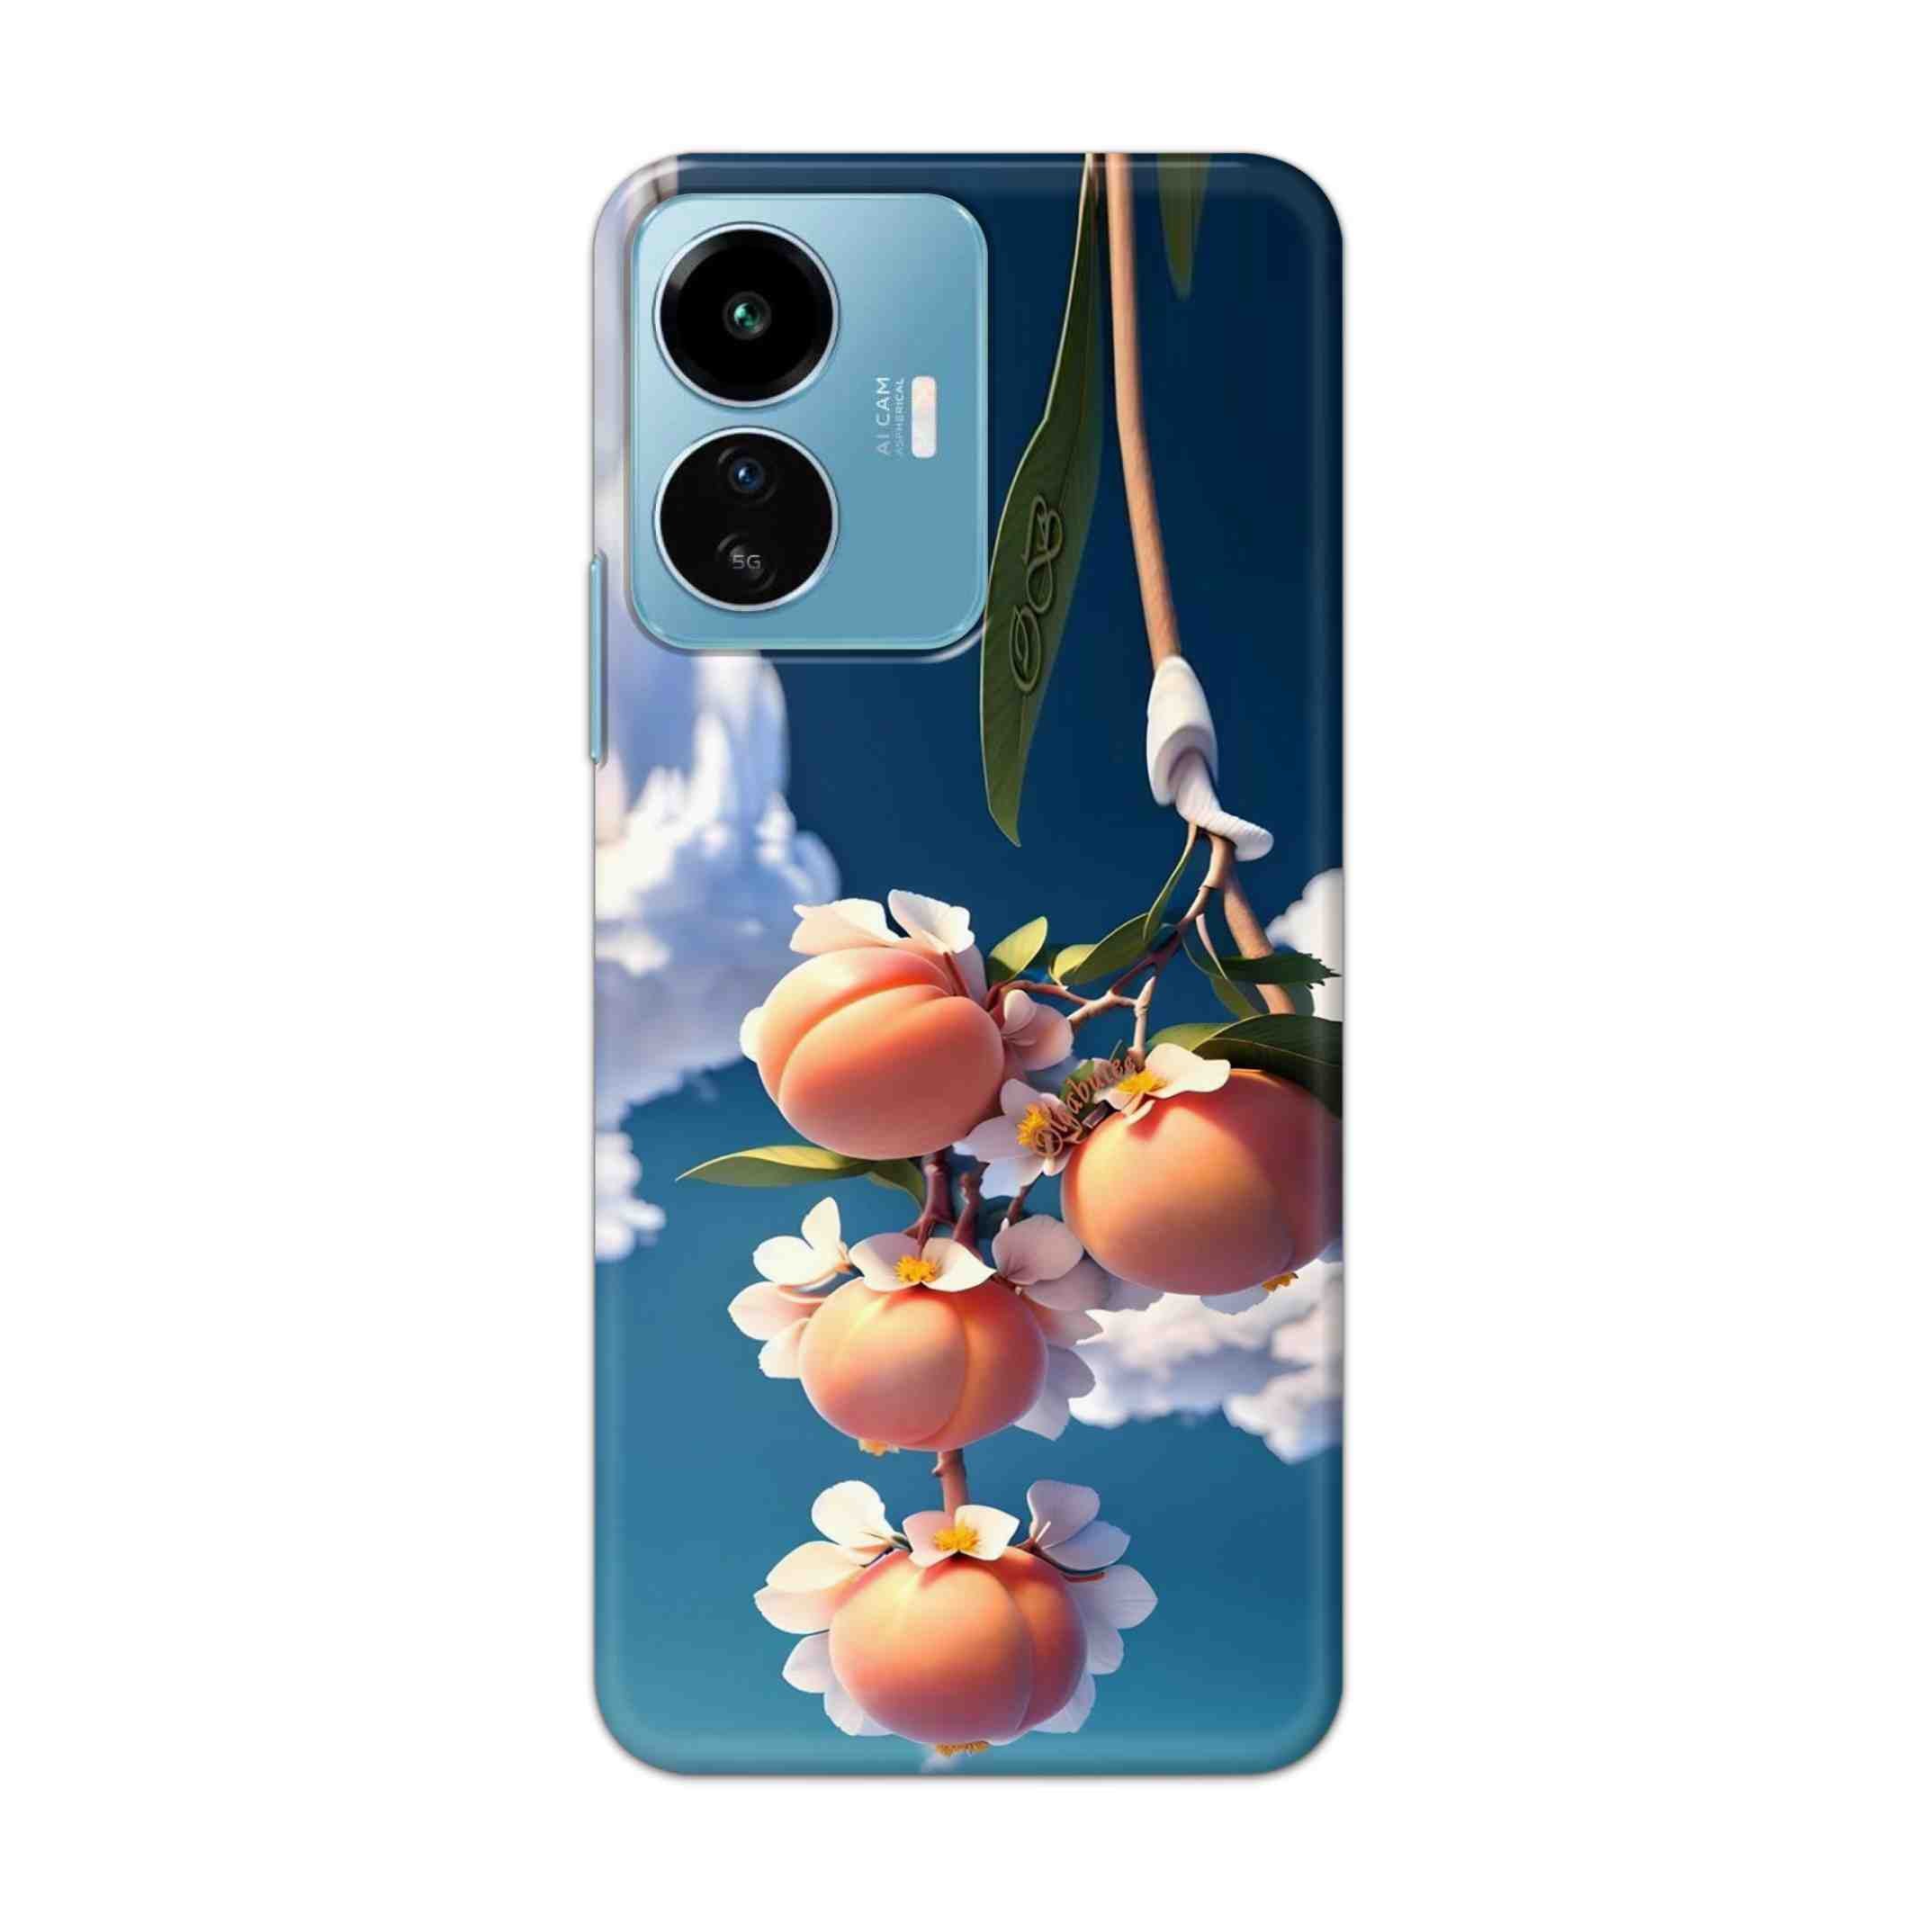 Buy Fruit Hard Back Mobile Phone Case Cover For IQOO Z6 Lite 5G Online